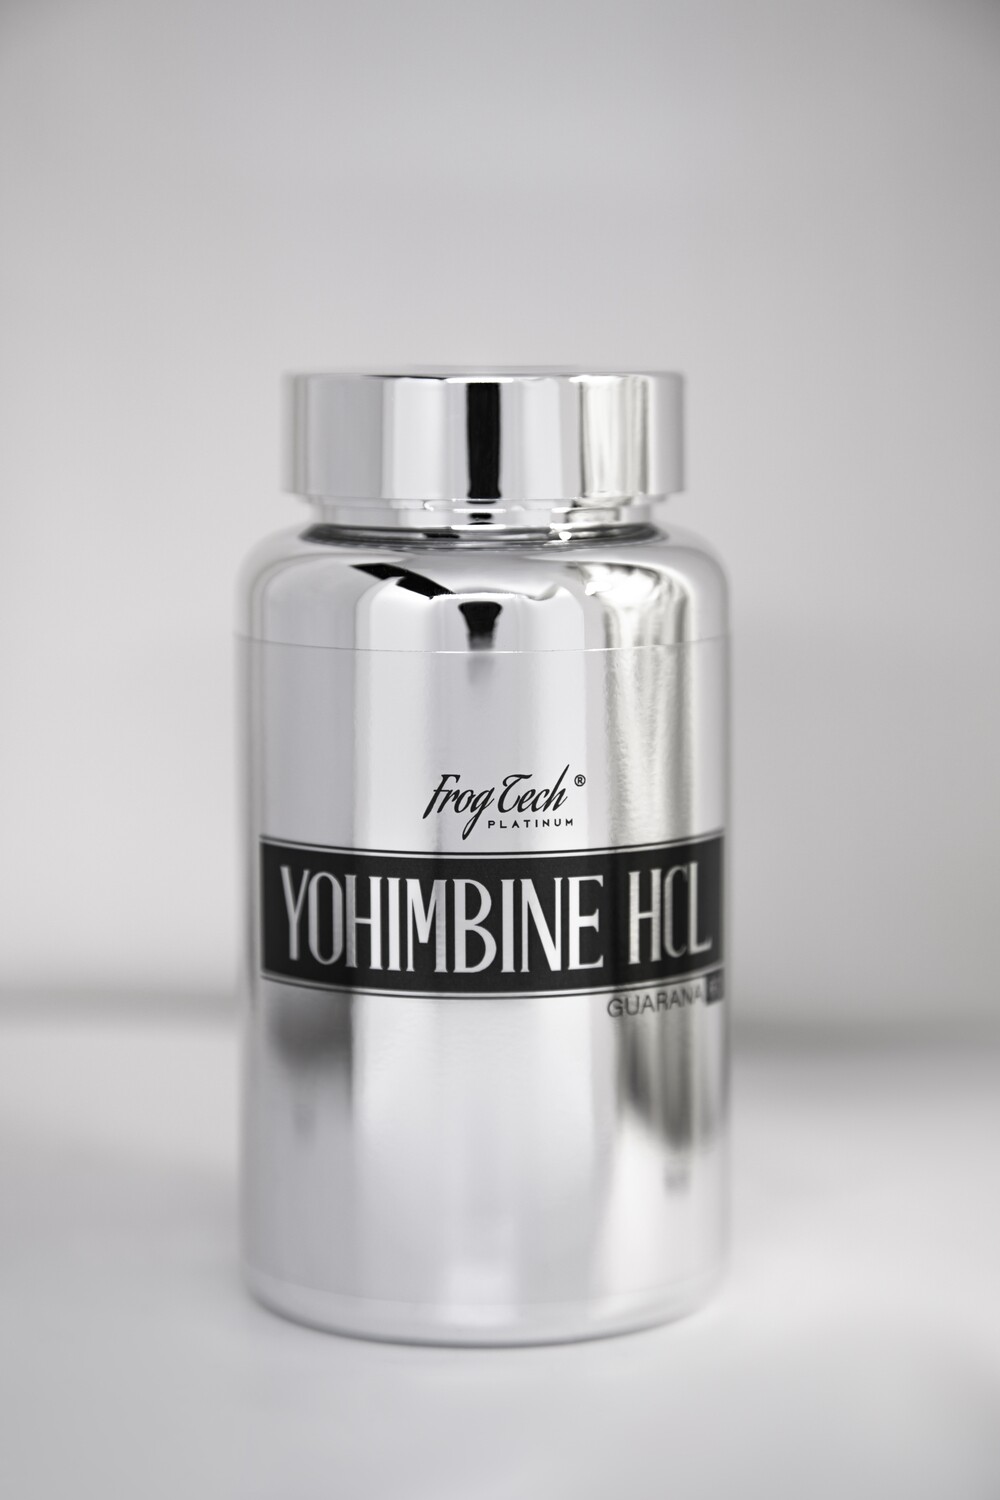 Yohimbine Hydrochloride 60 caps (5 mg Yohimbine HCL + 160 mg Guarana) (йохимбин гидрохлорид) купить от FROGTECH Platinum